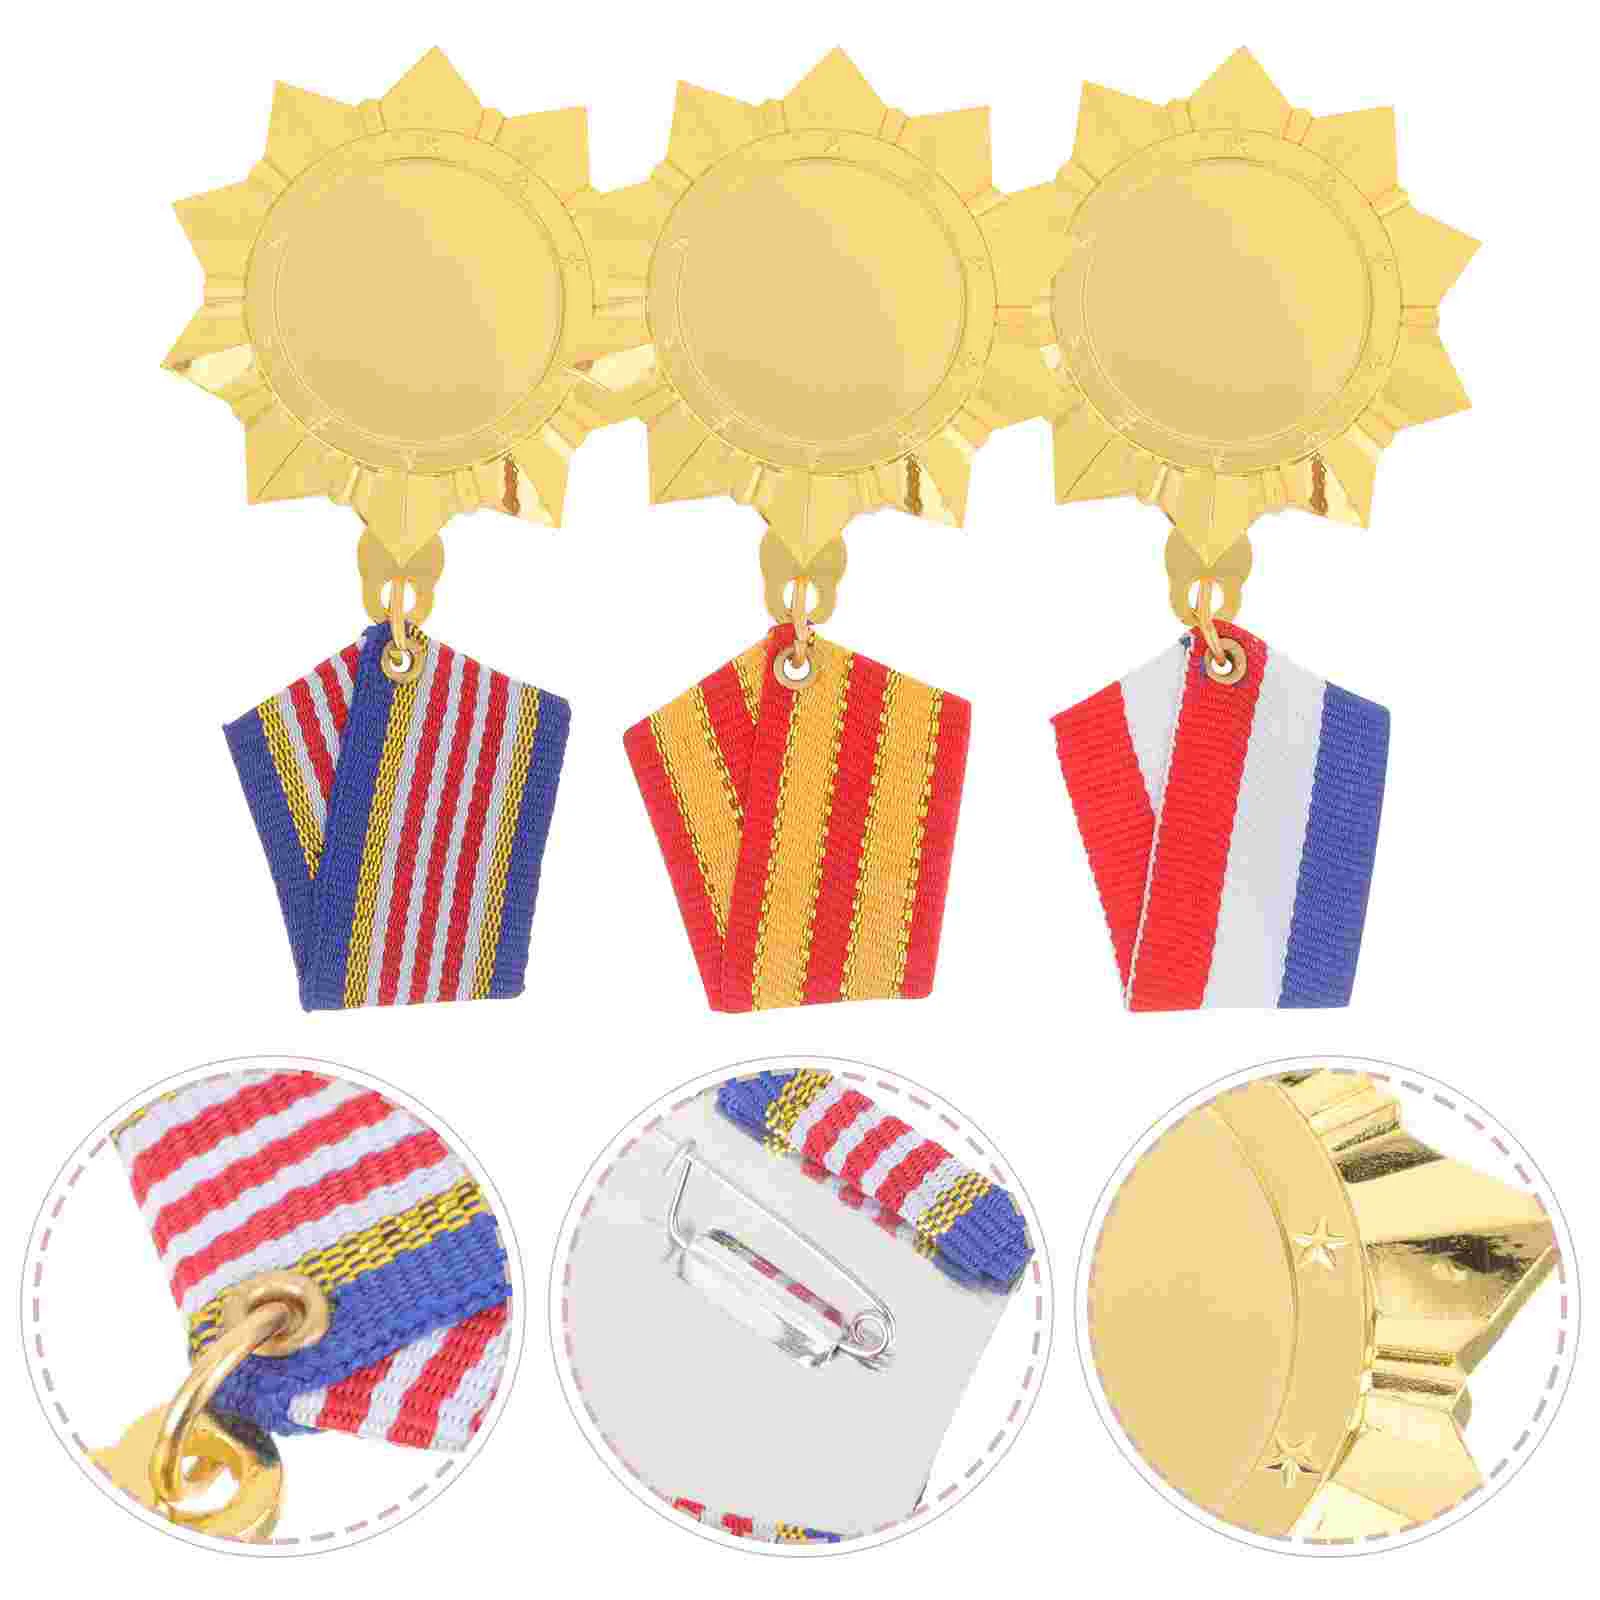 

Veteran Medal Memorial Alloy Kids Party Badge Lapel Pin Award Medals Game Prop Toys